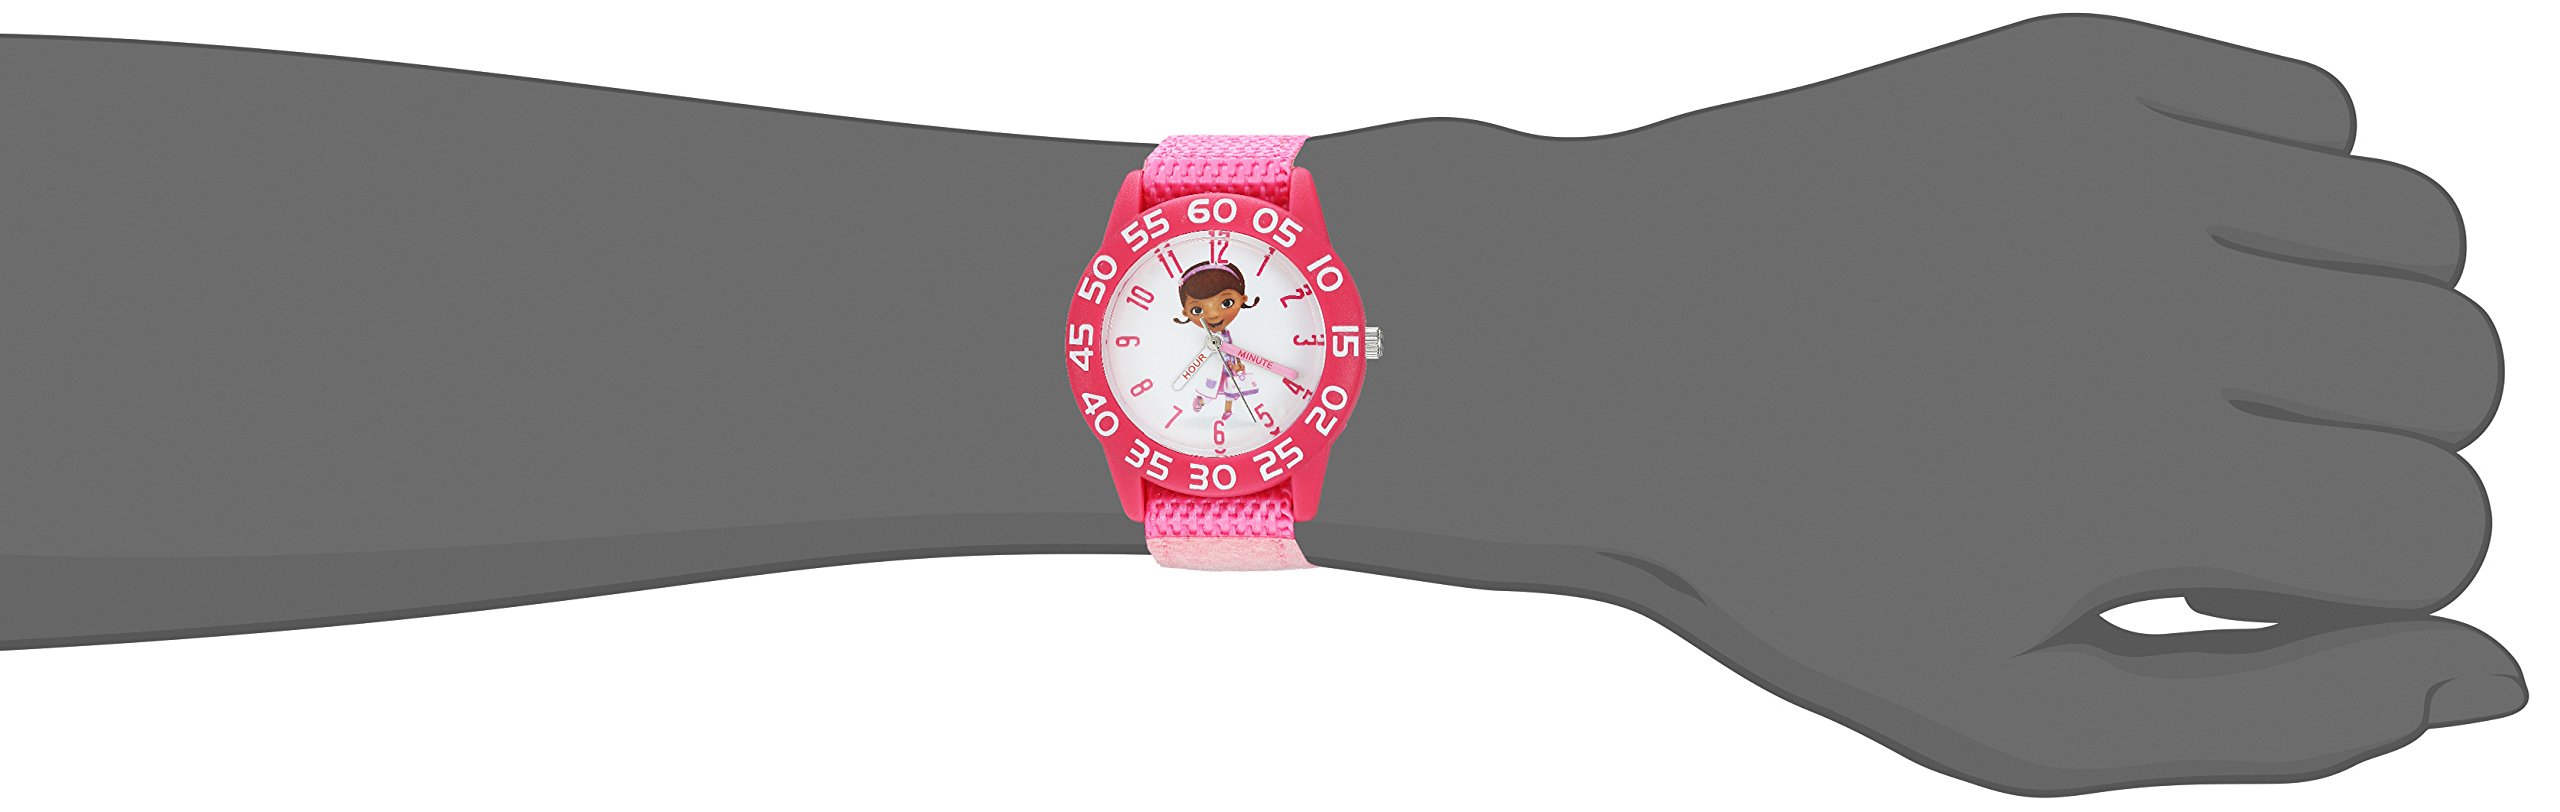 Disney Jr Kids' Plastic Time Teacher Analog Quartz Nylon Strap Watch